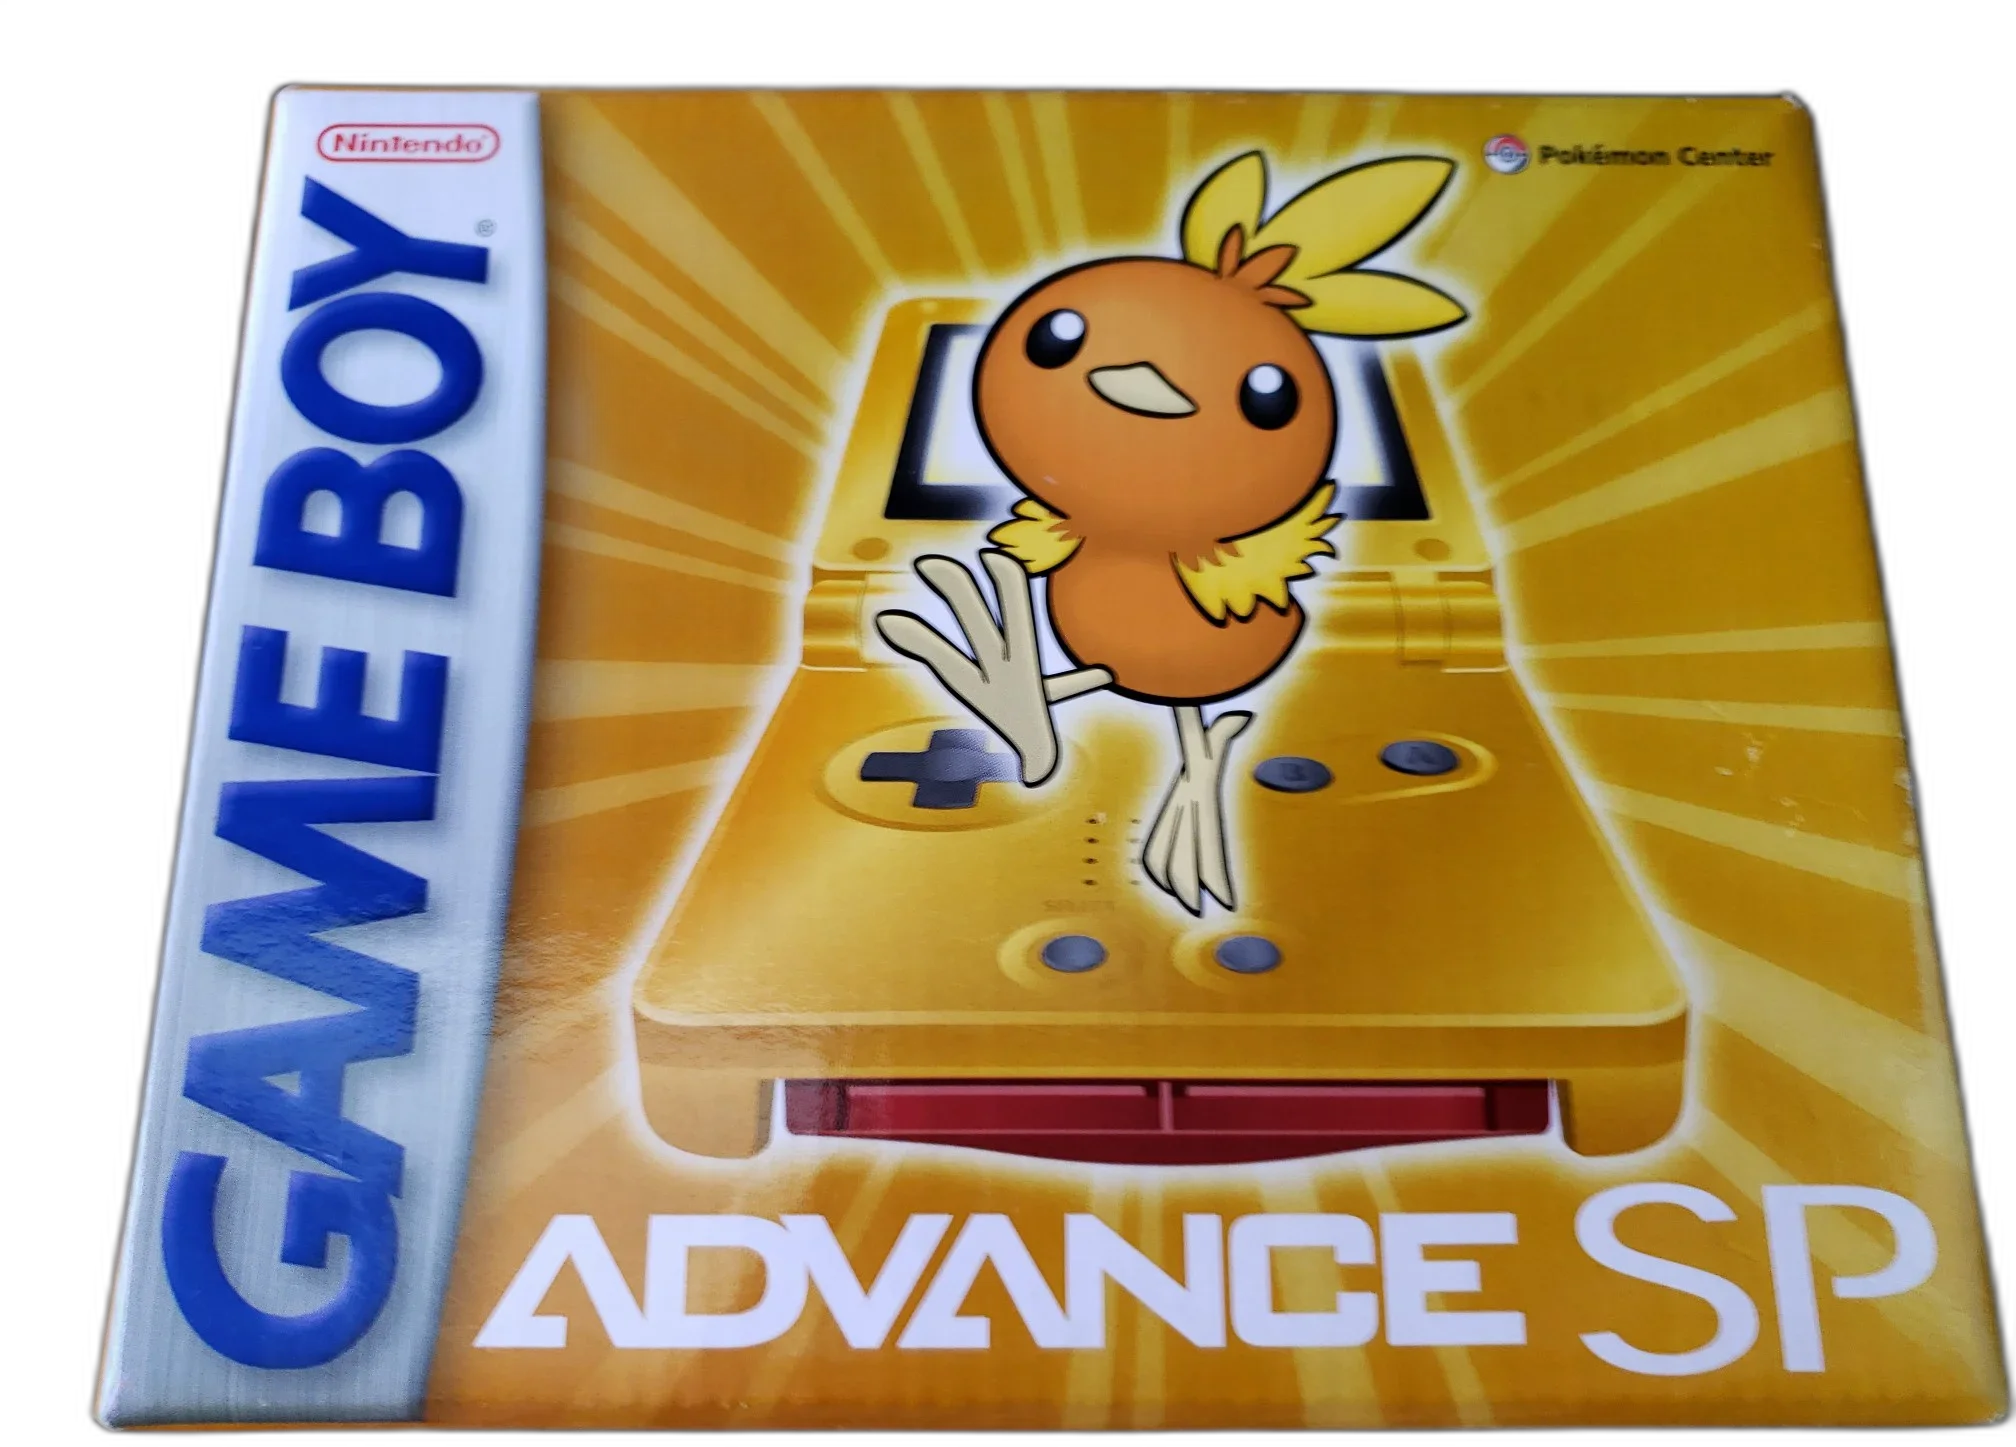  Nintendo Game Boy Advance SP Pokemon Center Torchic [US]